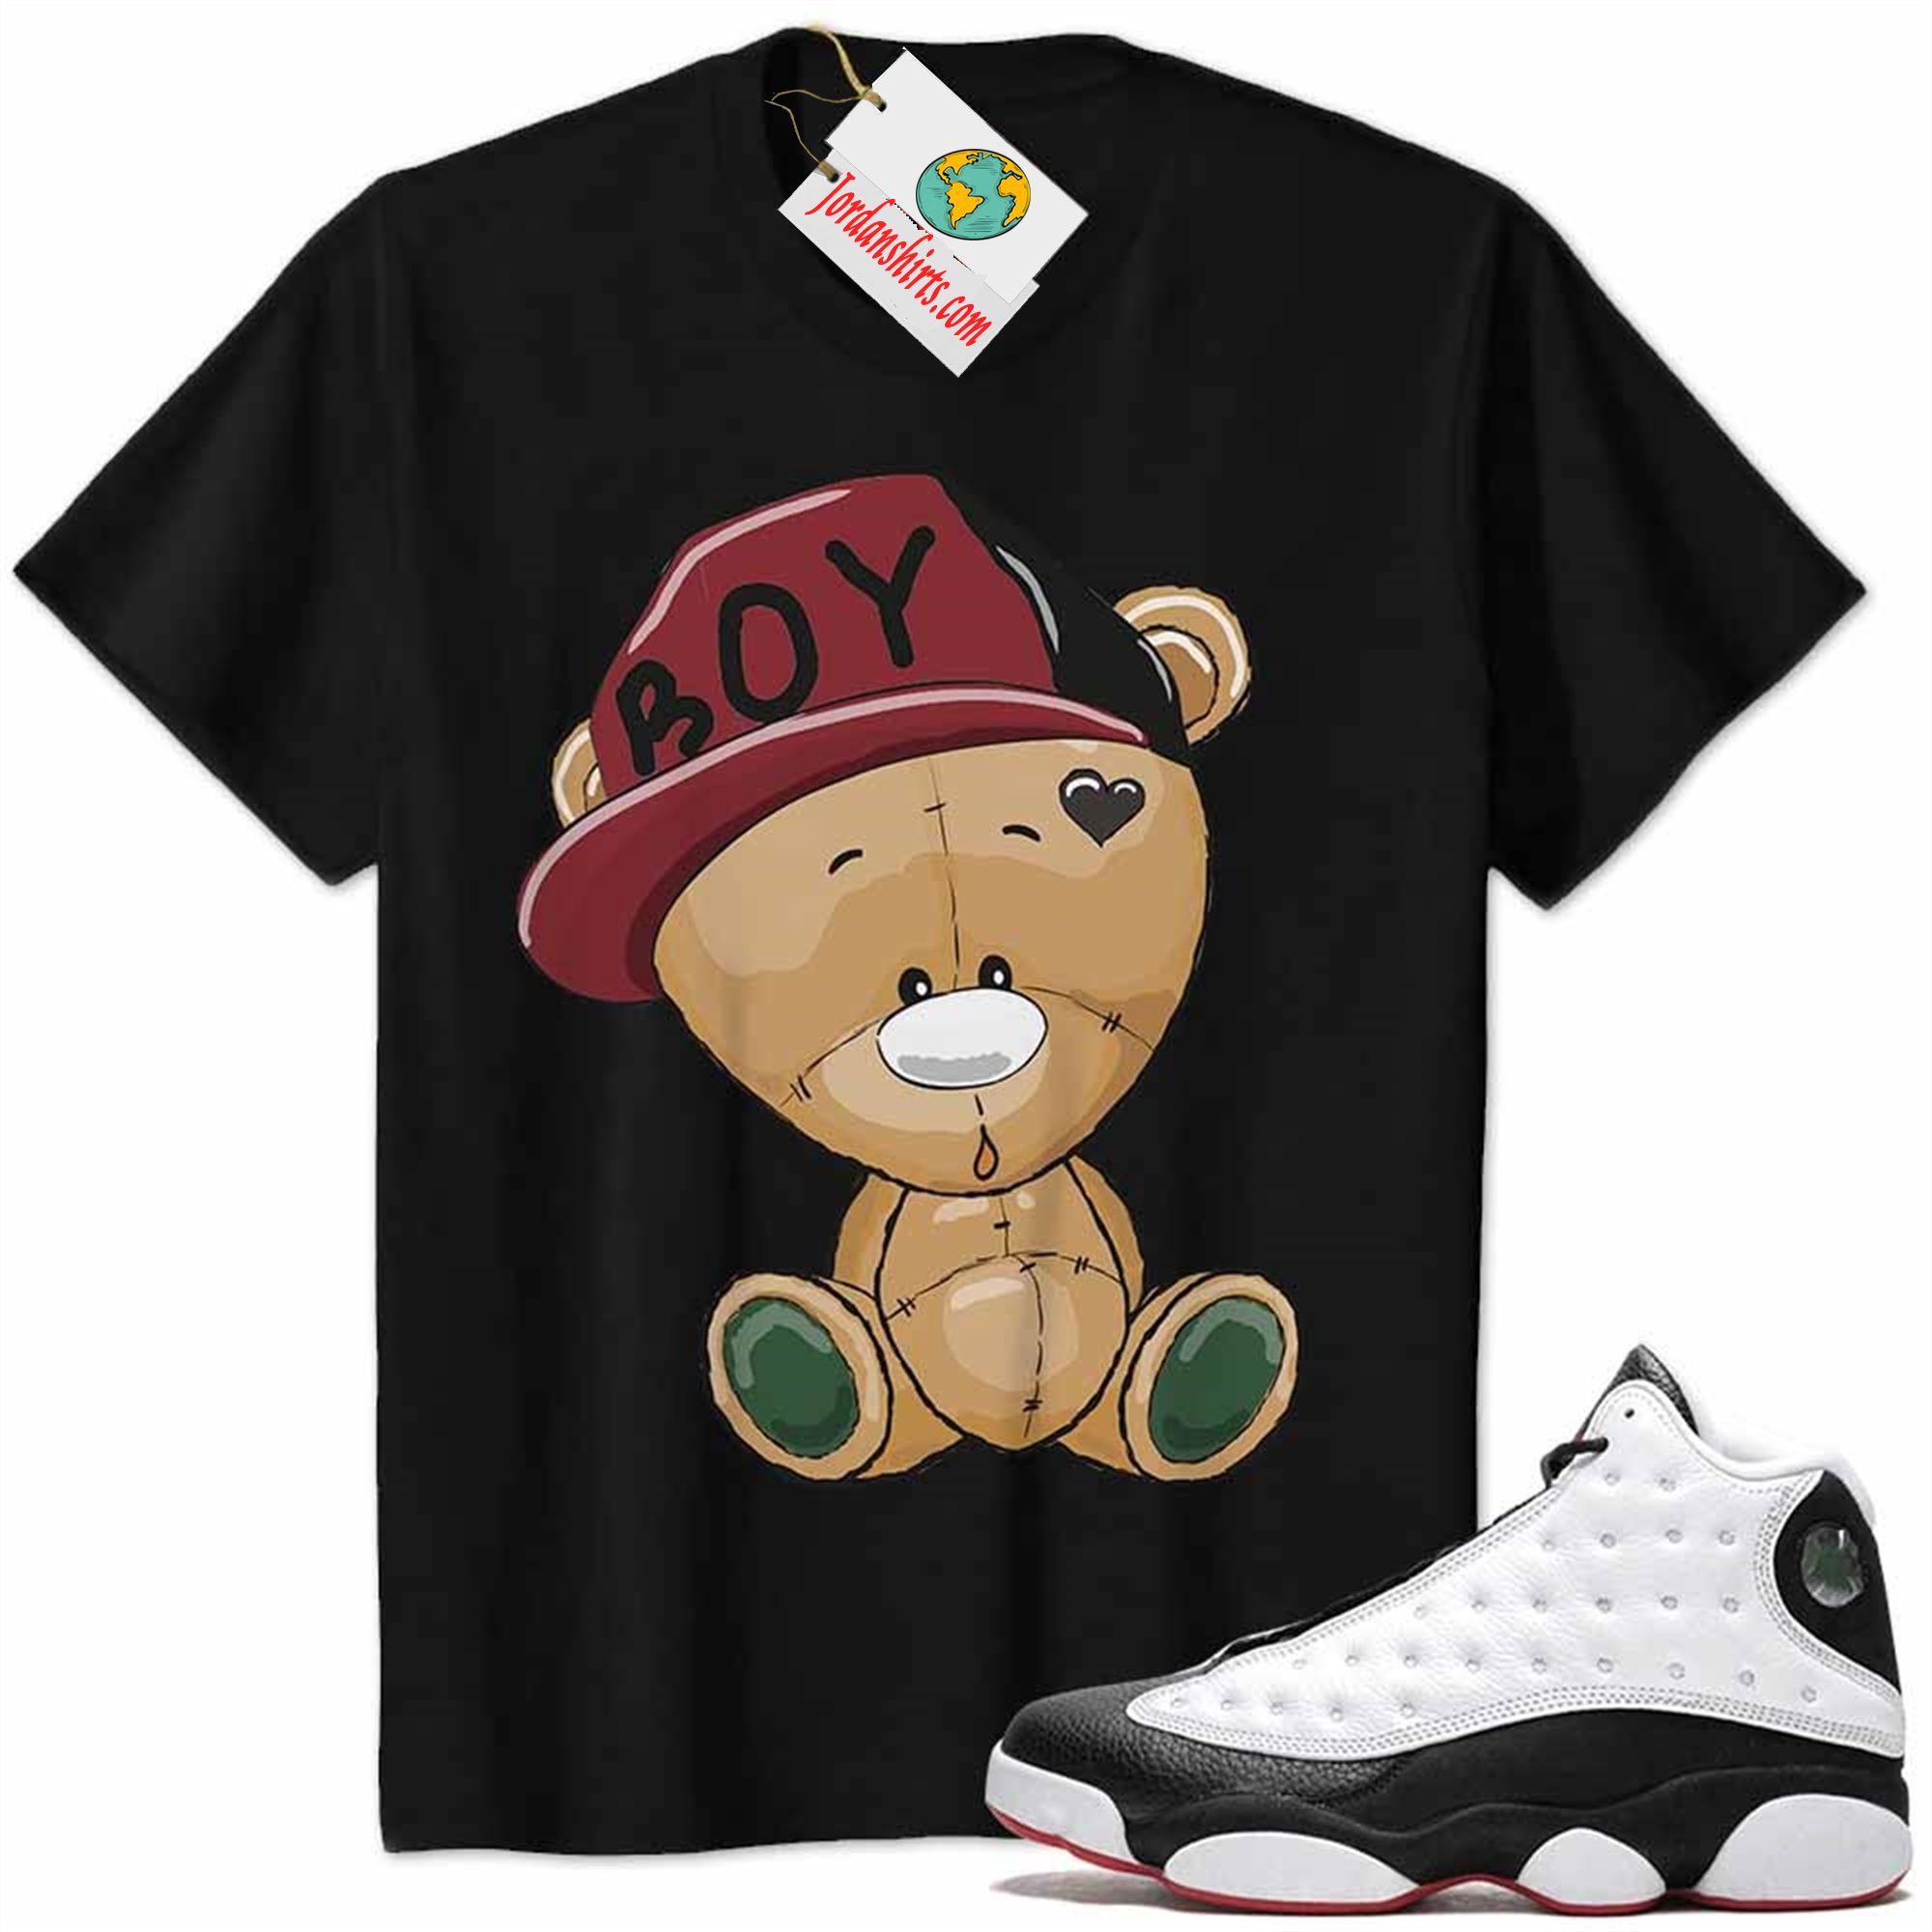 Jordan 13 Shirt, Jordan 13 He Got Game Shirt Cute Baby Teddy Bear Black Size Up To 5xl